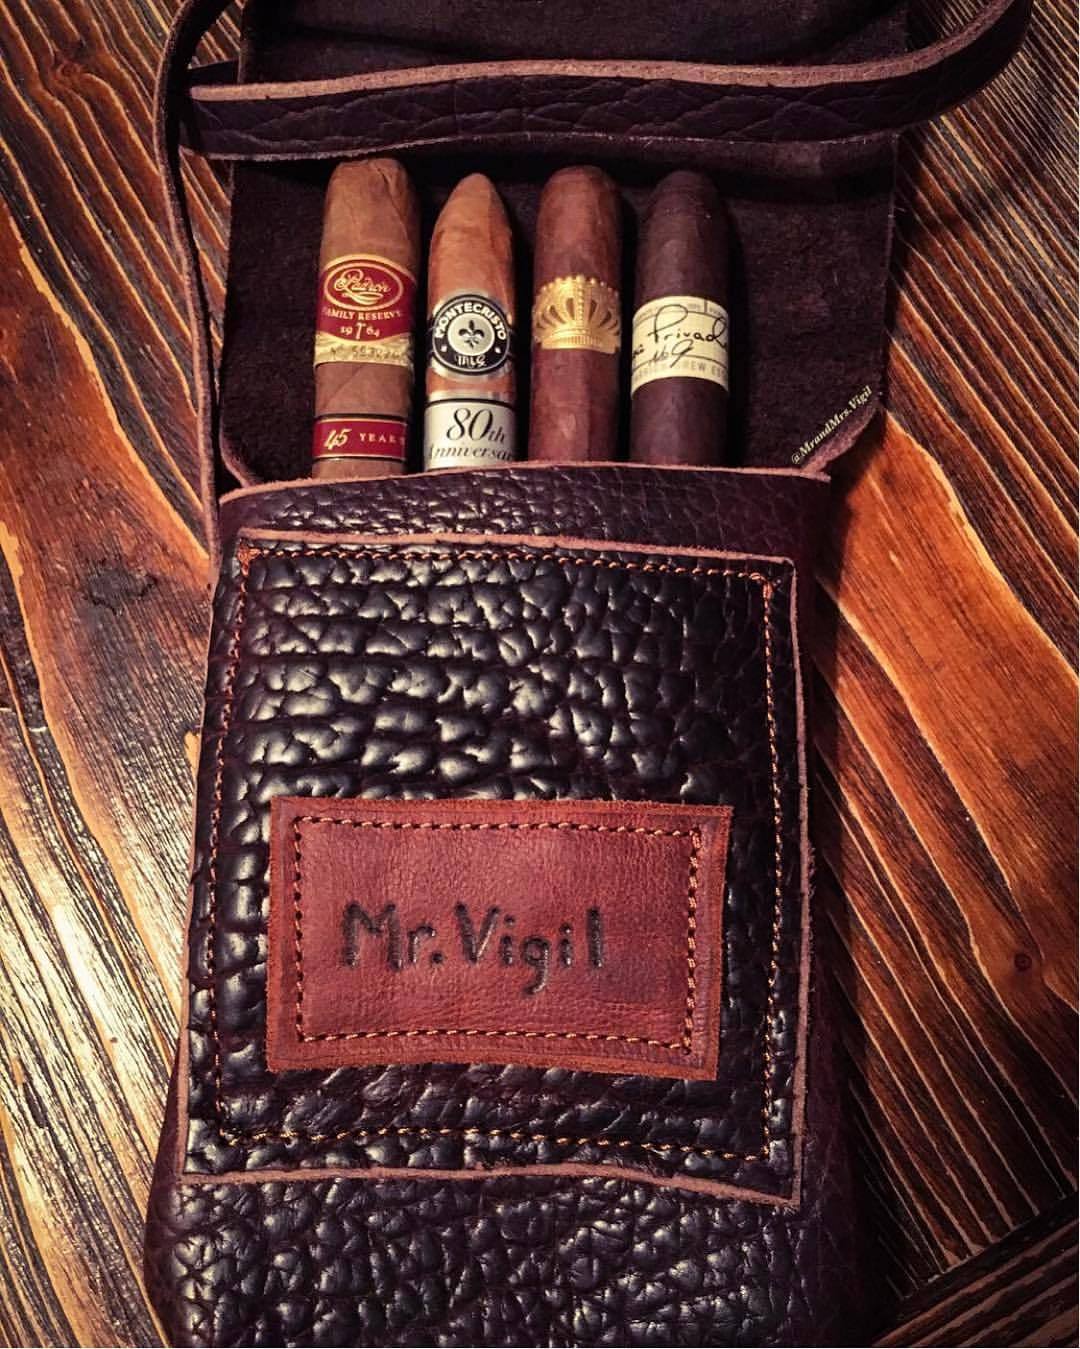 Repost from @mrandmrs.vigil Enjoying my new carrier from @legendarysaxon the quality is stunning 👊 #cigars #botl #sotl #cigarboss #cigartime #cigarphoto #briarnation #distinguishedruffian #padroncigars #padron1964 #montecristocigars...